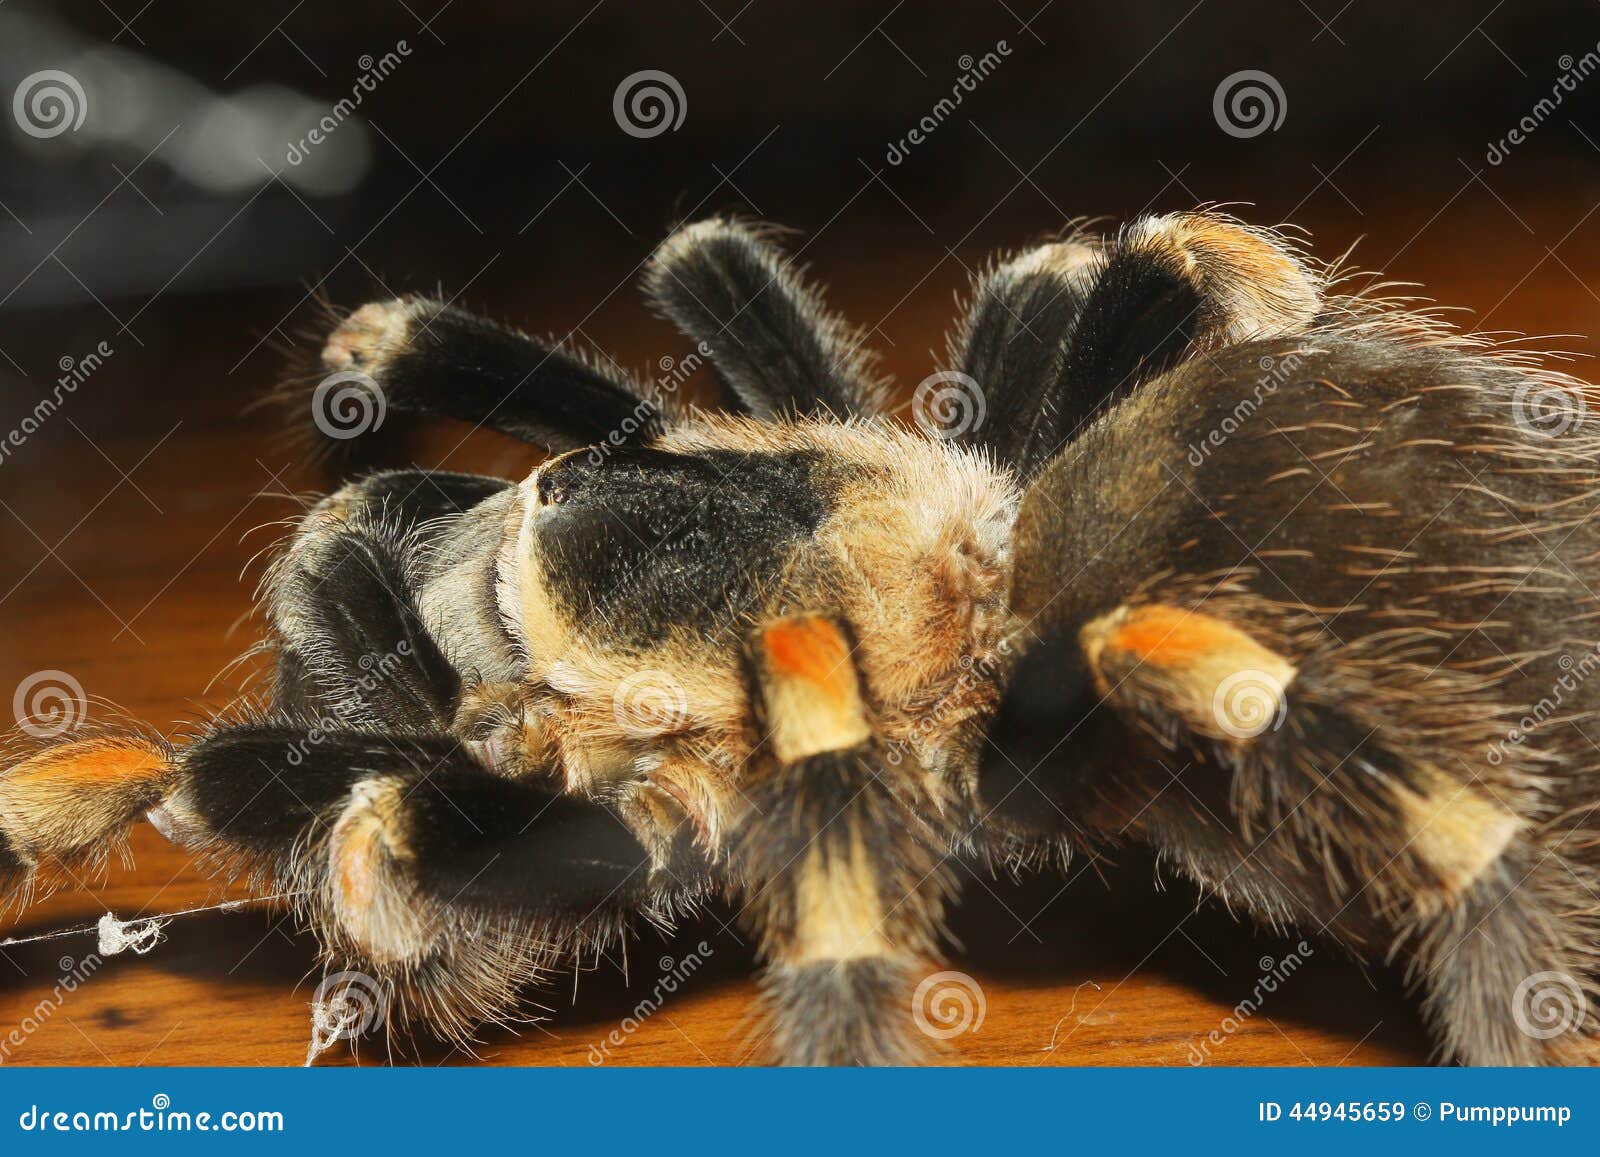 Tarantula Spider, Brachypelma Boehmei Stock Image - Image of deadly ...